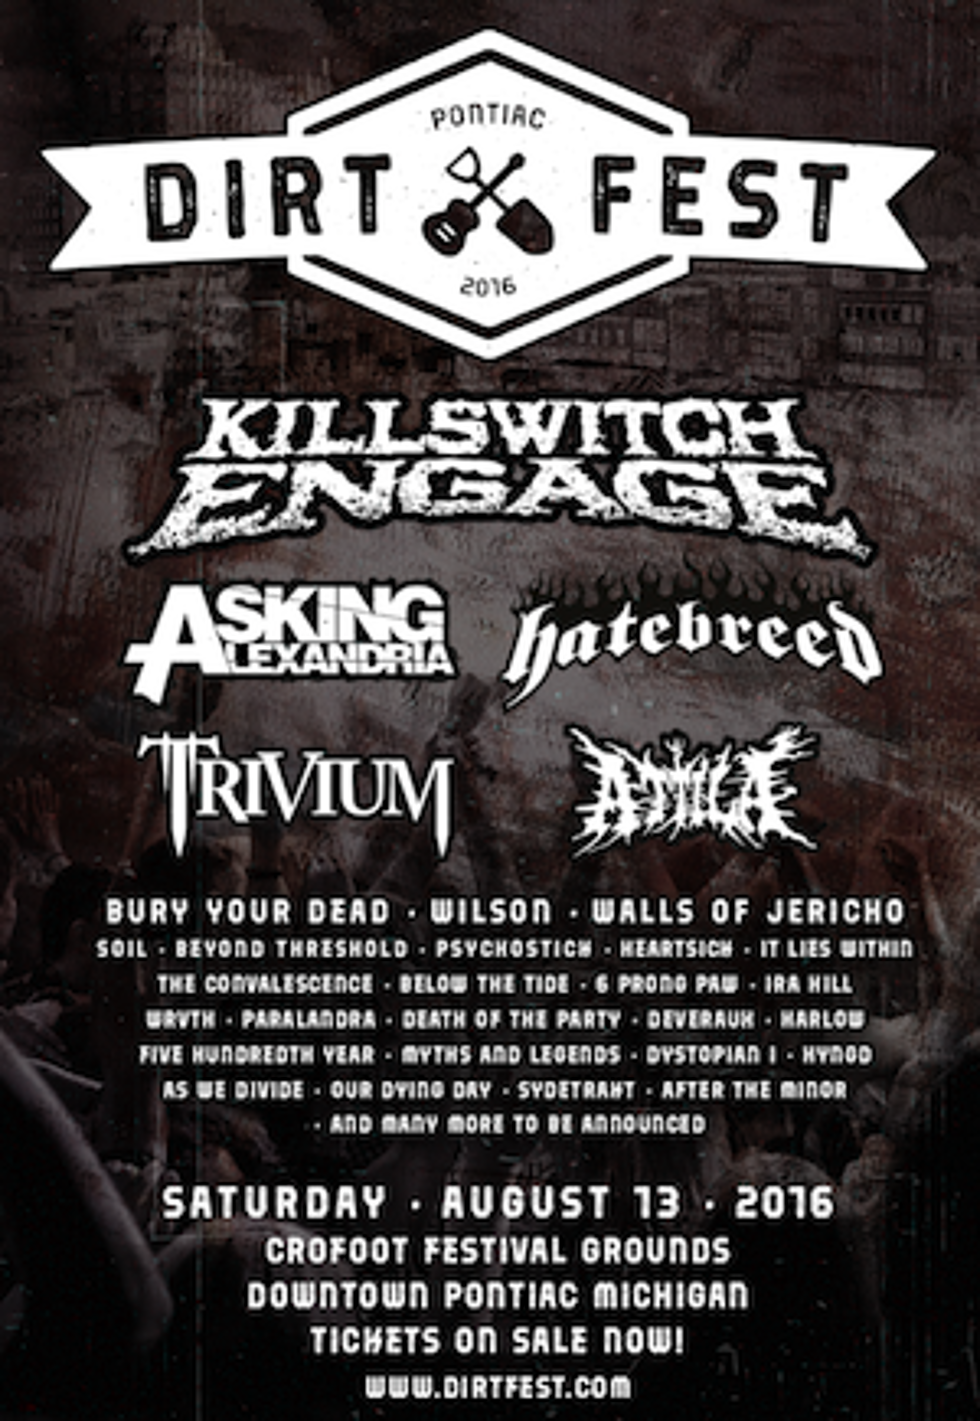 Killswitch Engage, Asking Alexandria + Hatebreed Lead Dirt Fest 2016 Lineup